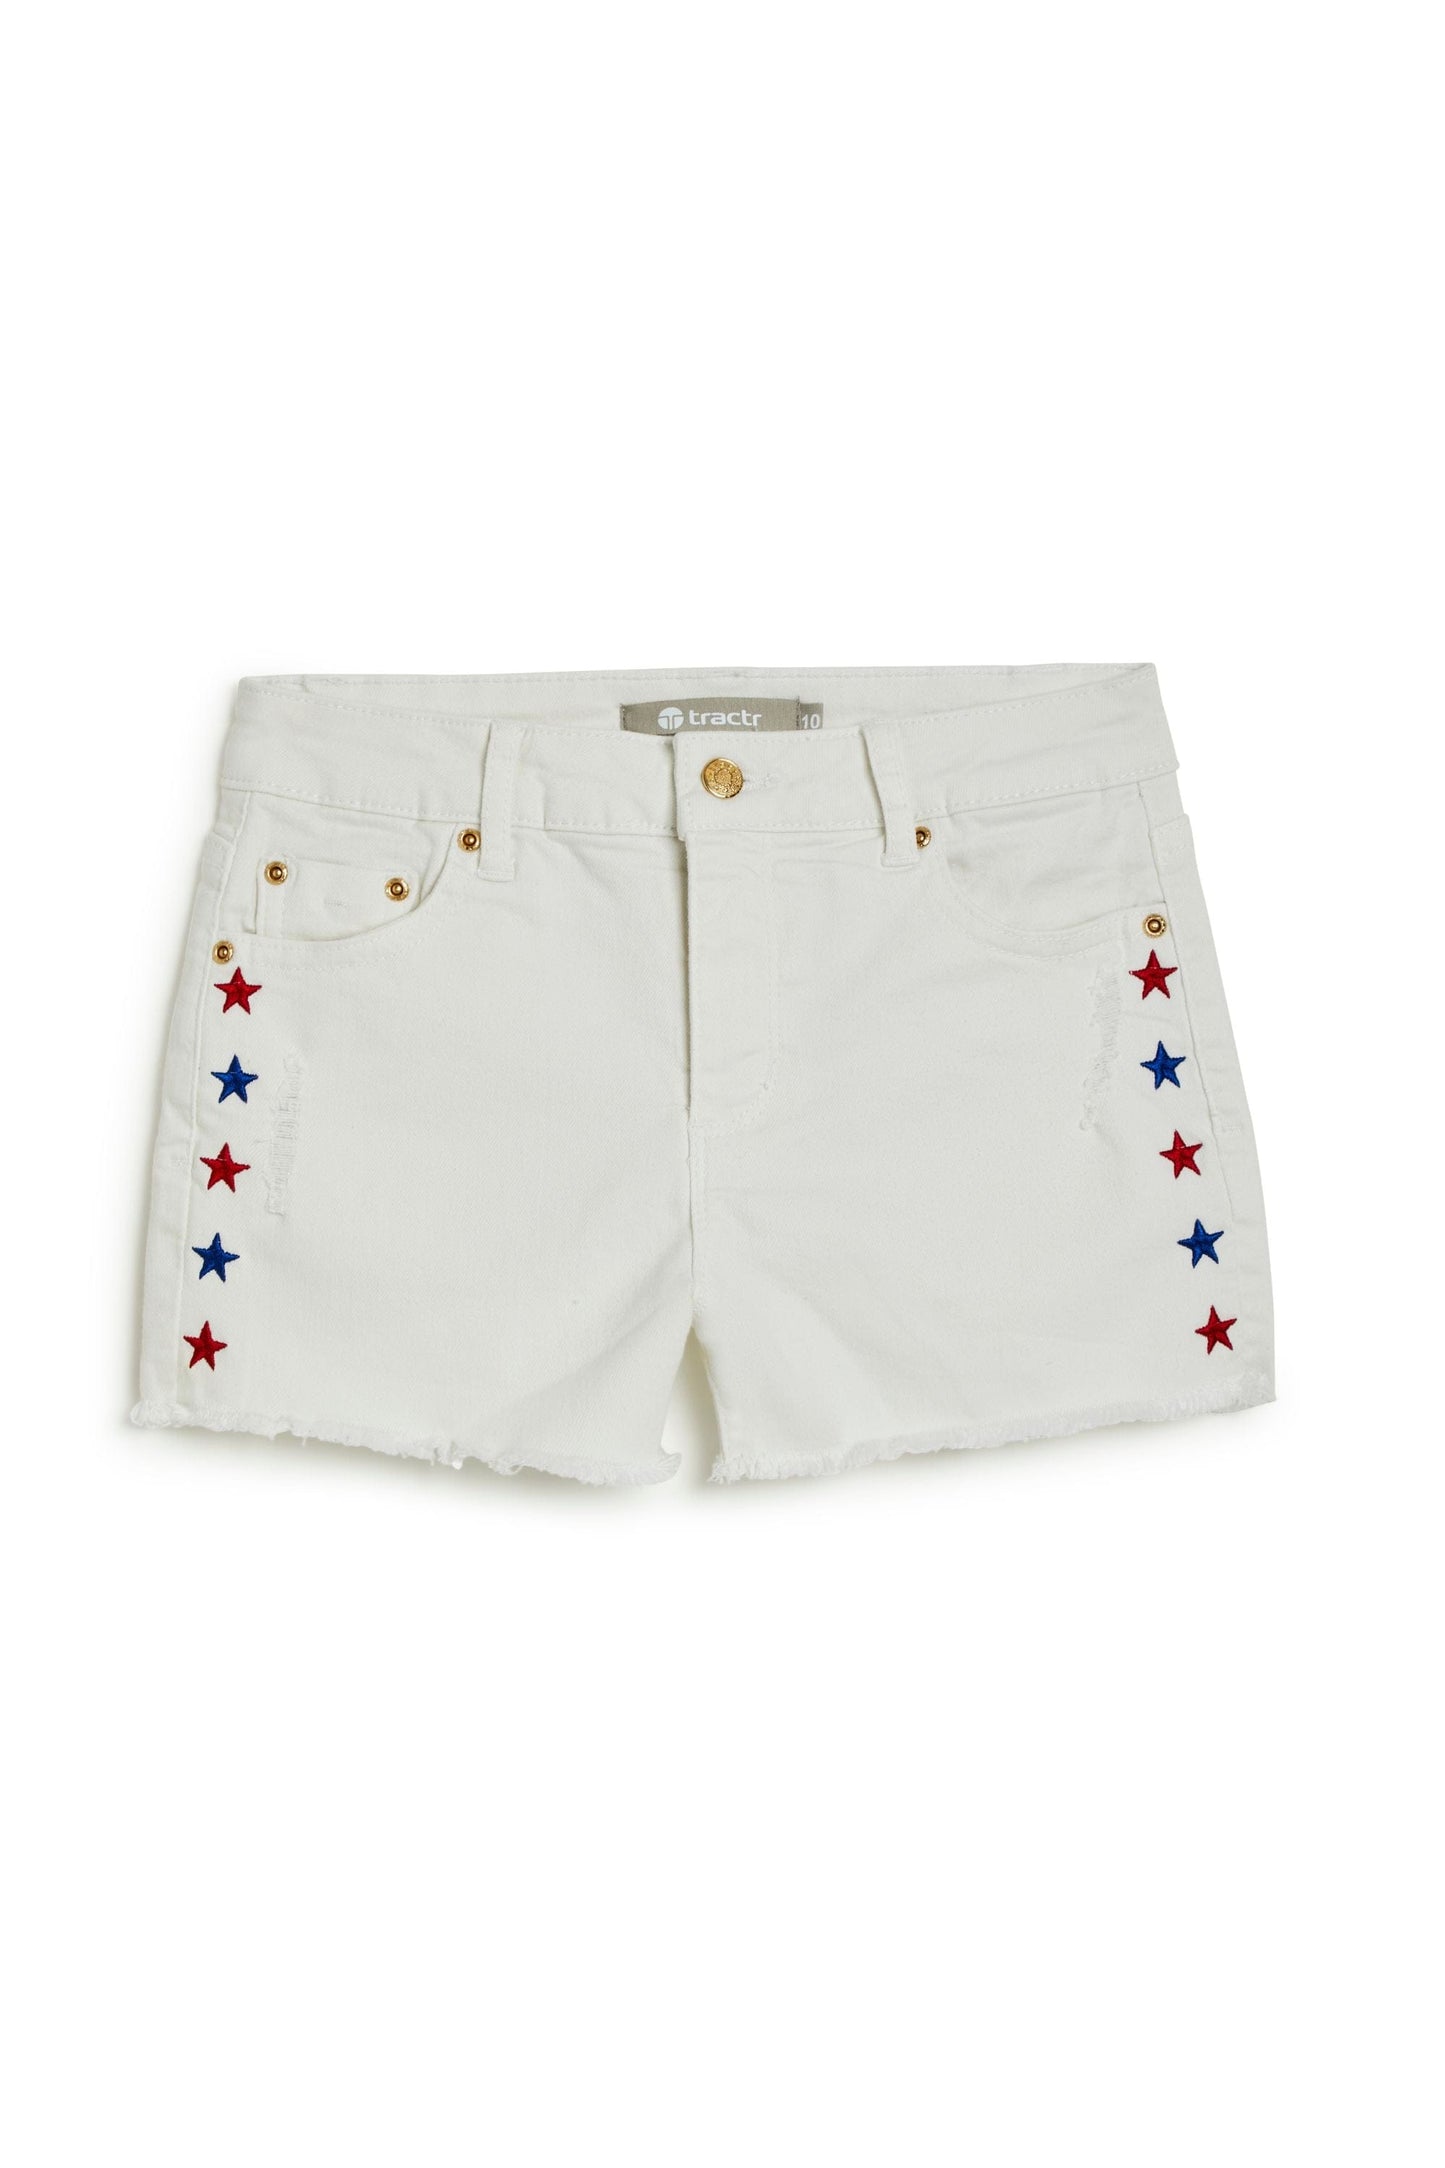 USA Star Print Embroidery Shorts